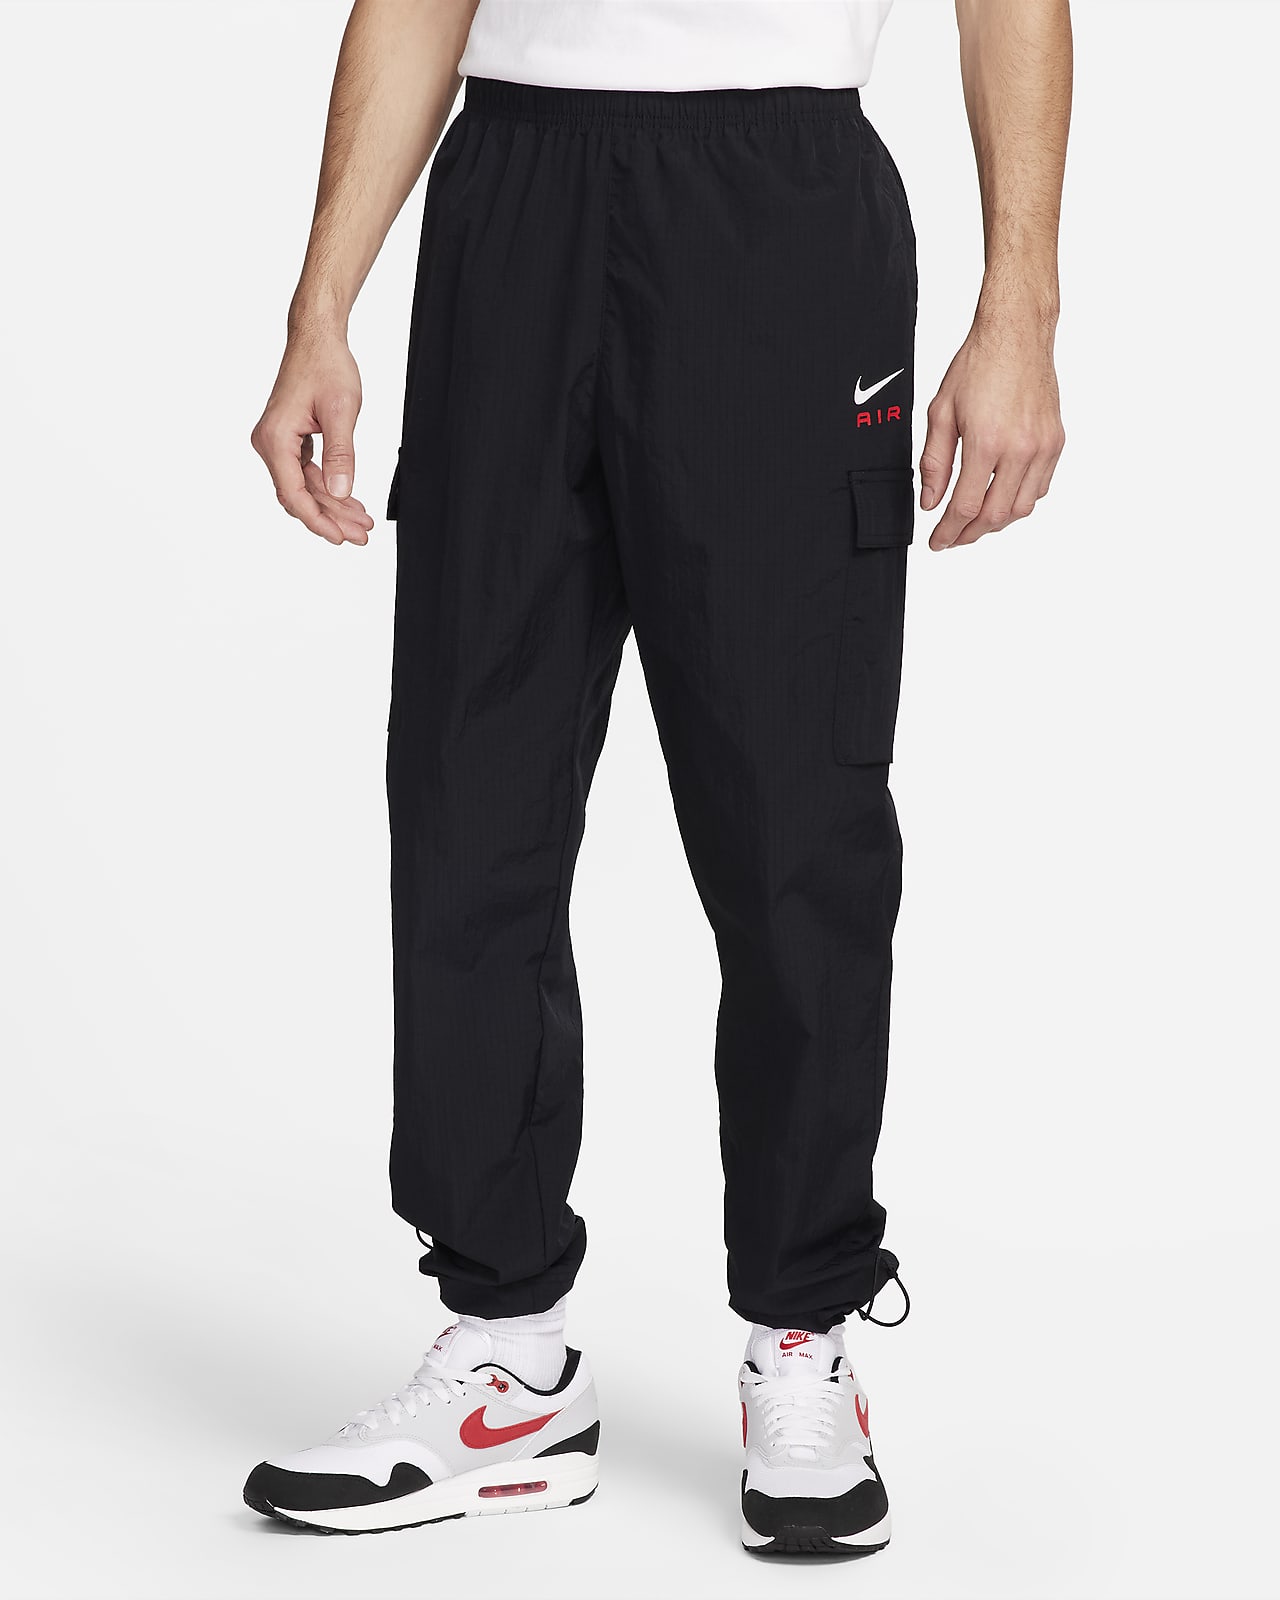 Nike Air Men's Lightweight Woven Trousers